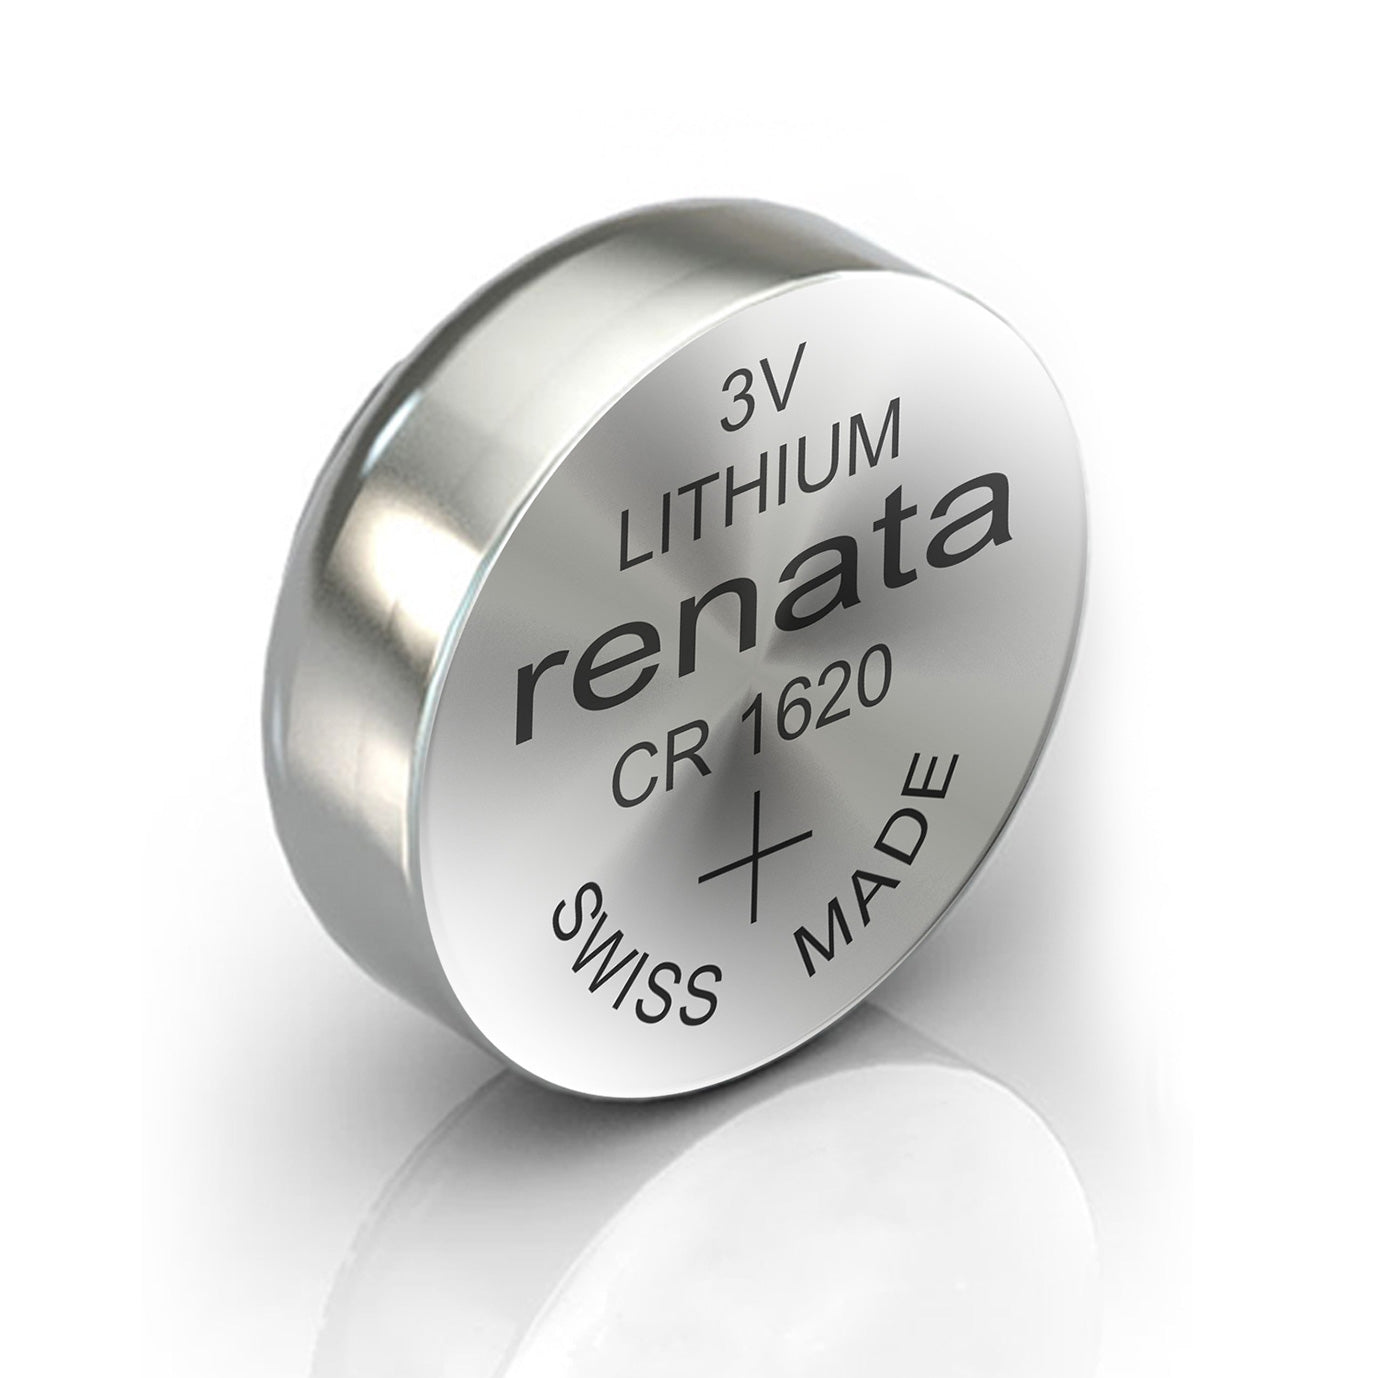 2pc/lot renata 100% Original CR1620 Button Cell Battery For Watch Car  Remote Key cr 1620 ECR1620 GPCR1620 3v Lithium Battery